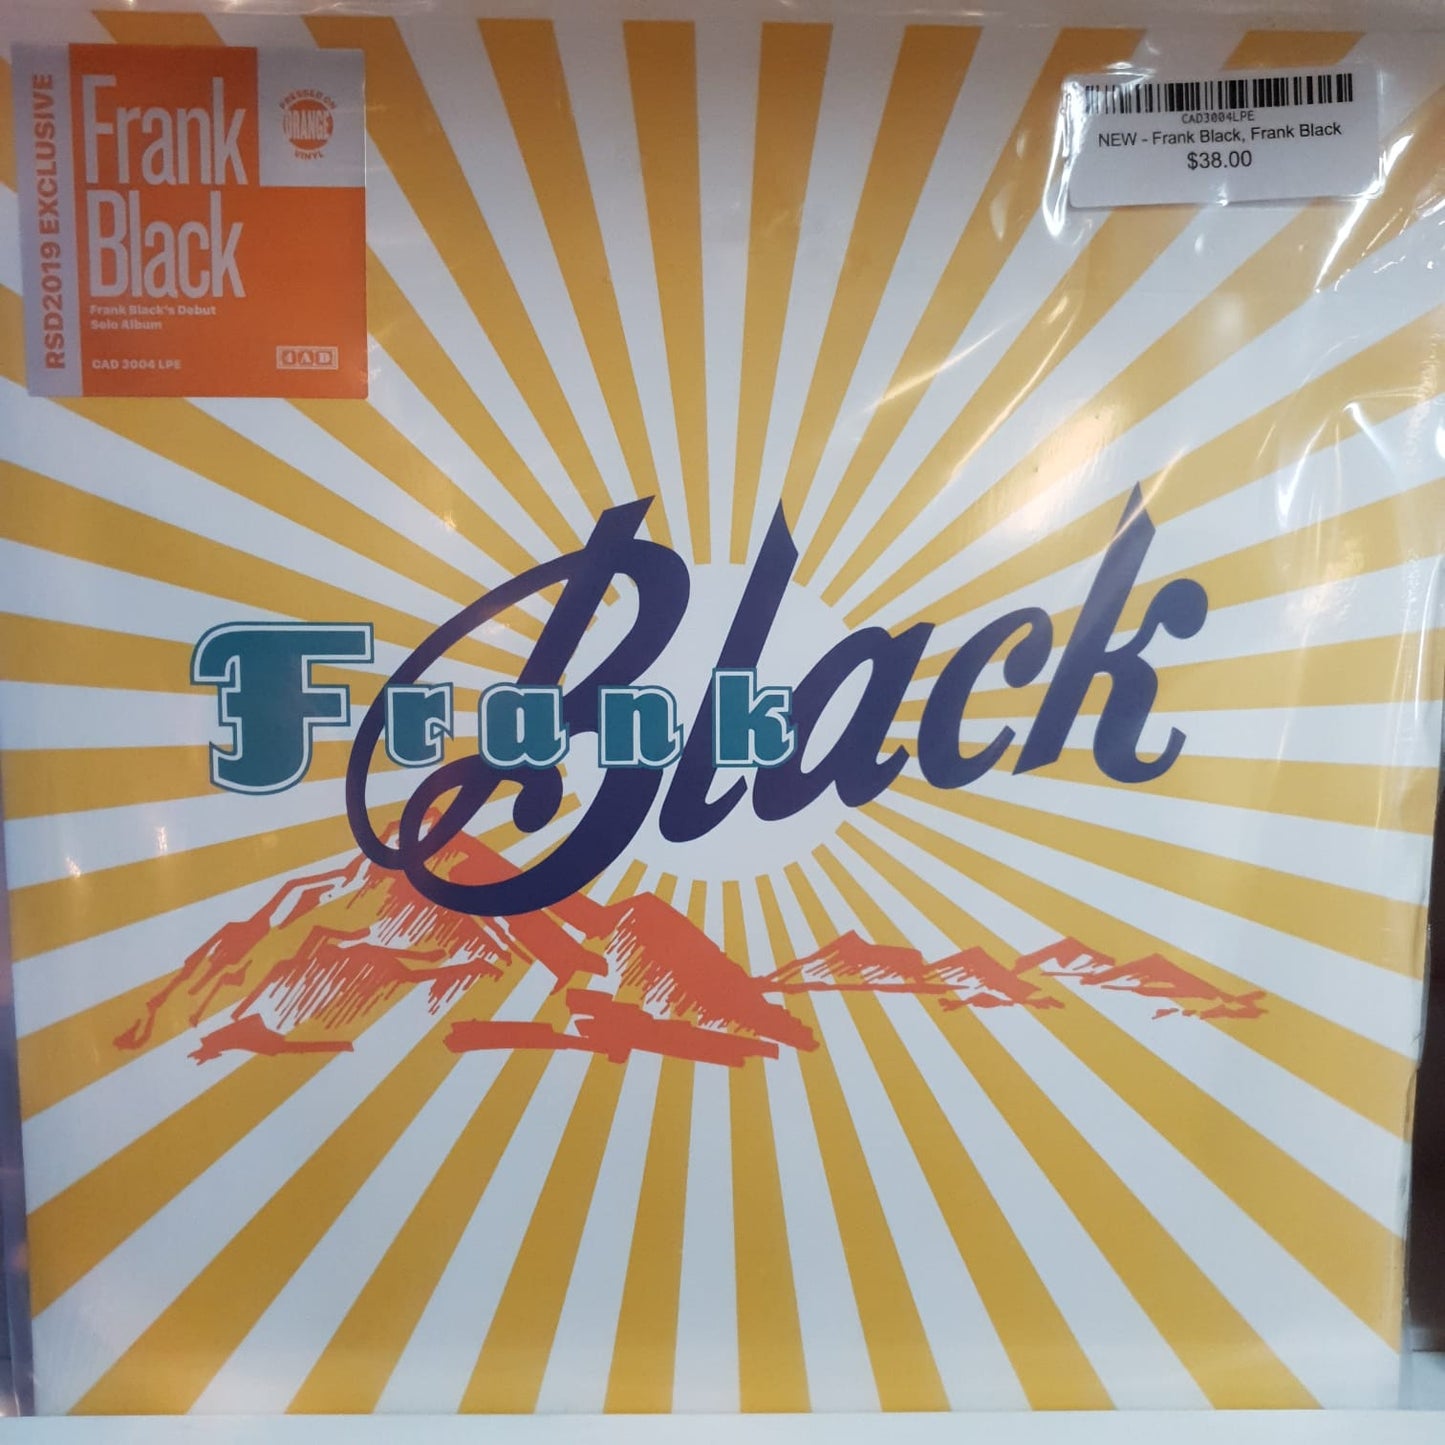 NEW - Frank Black, Frank Black Orange LP